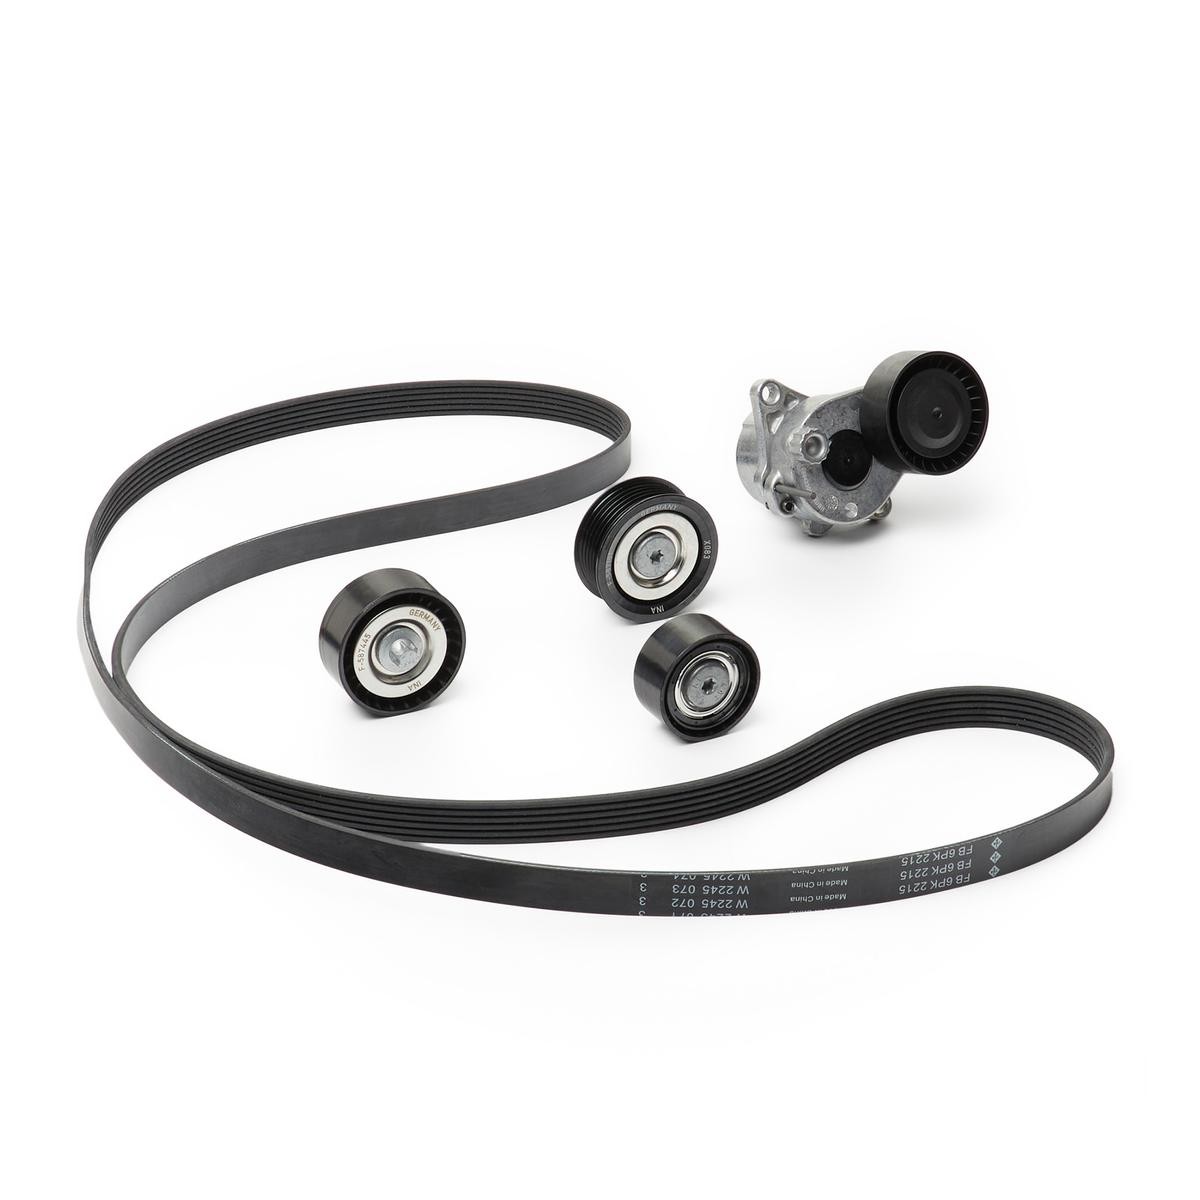 529 0361 10 INA Serpentine belt kit HONDA Check alternator freewheel clutch & replace if necessary